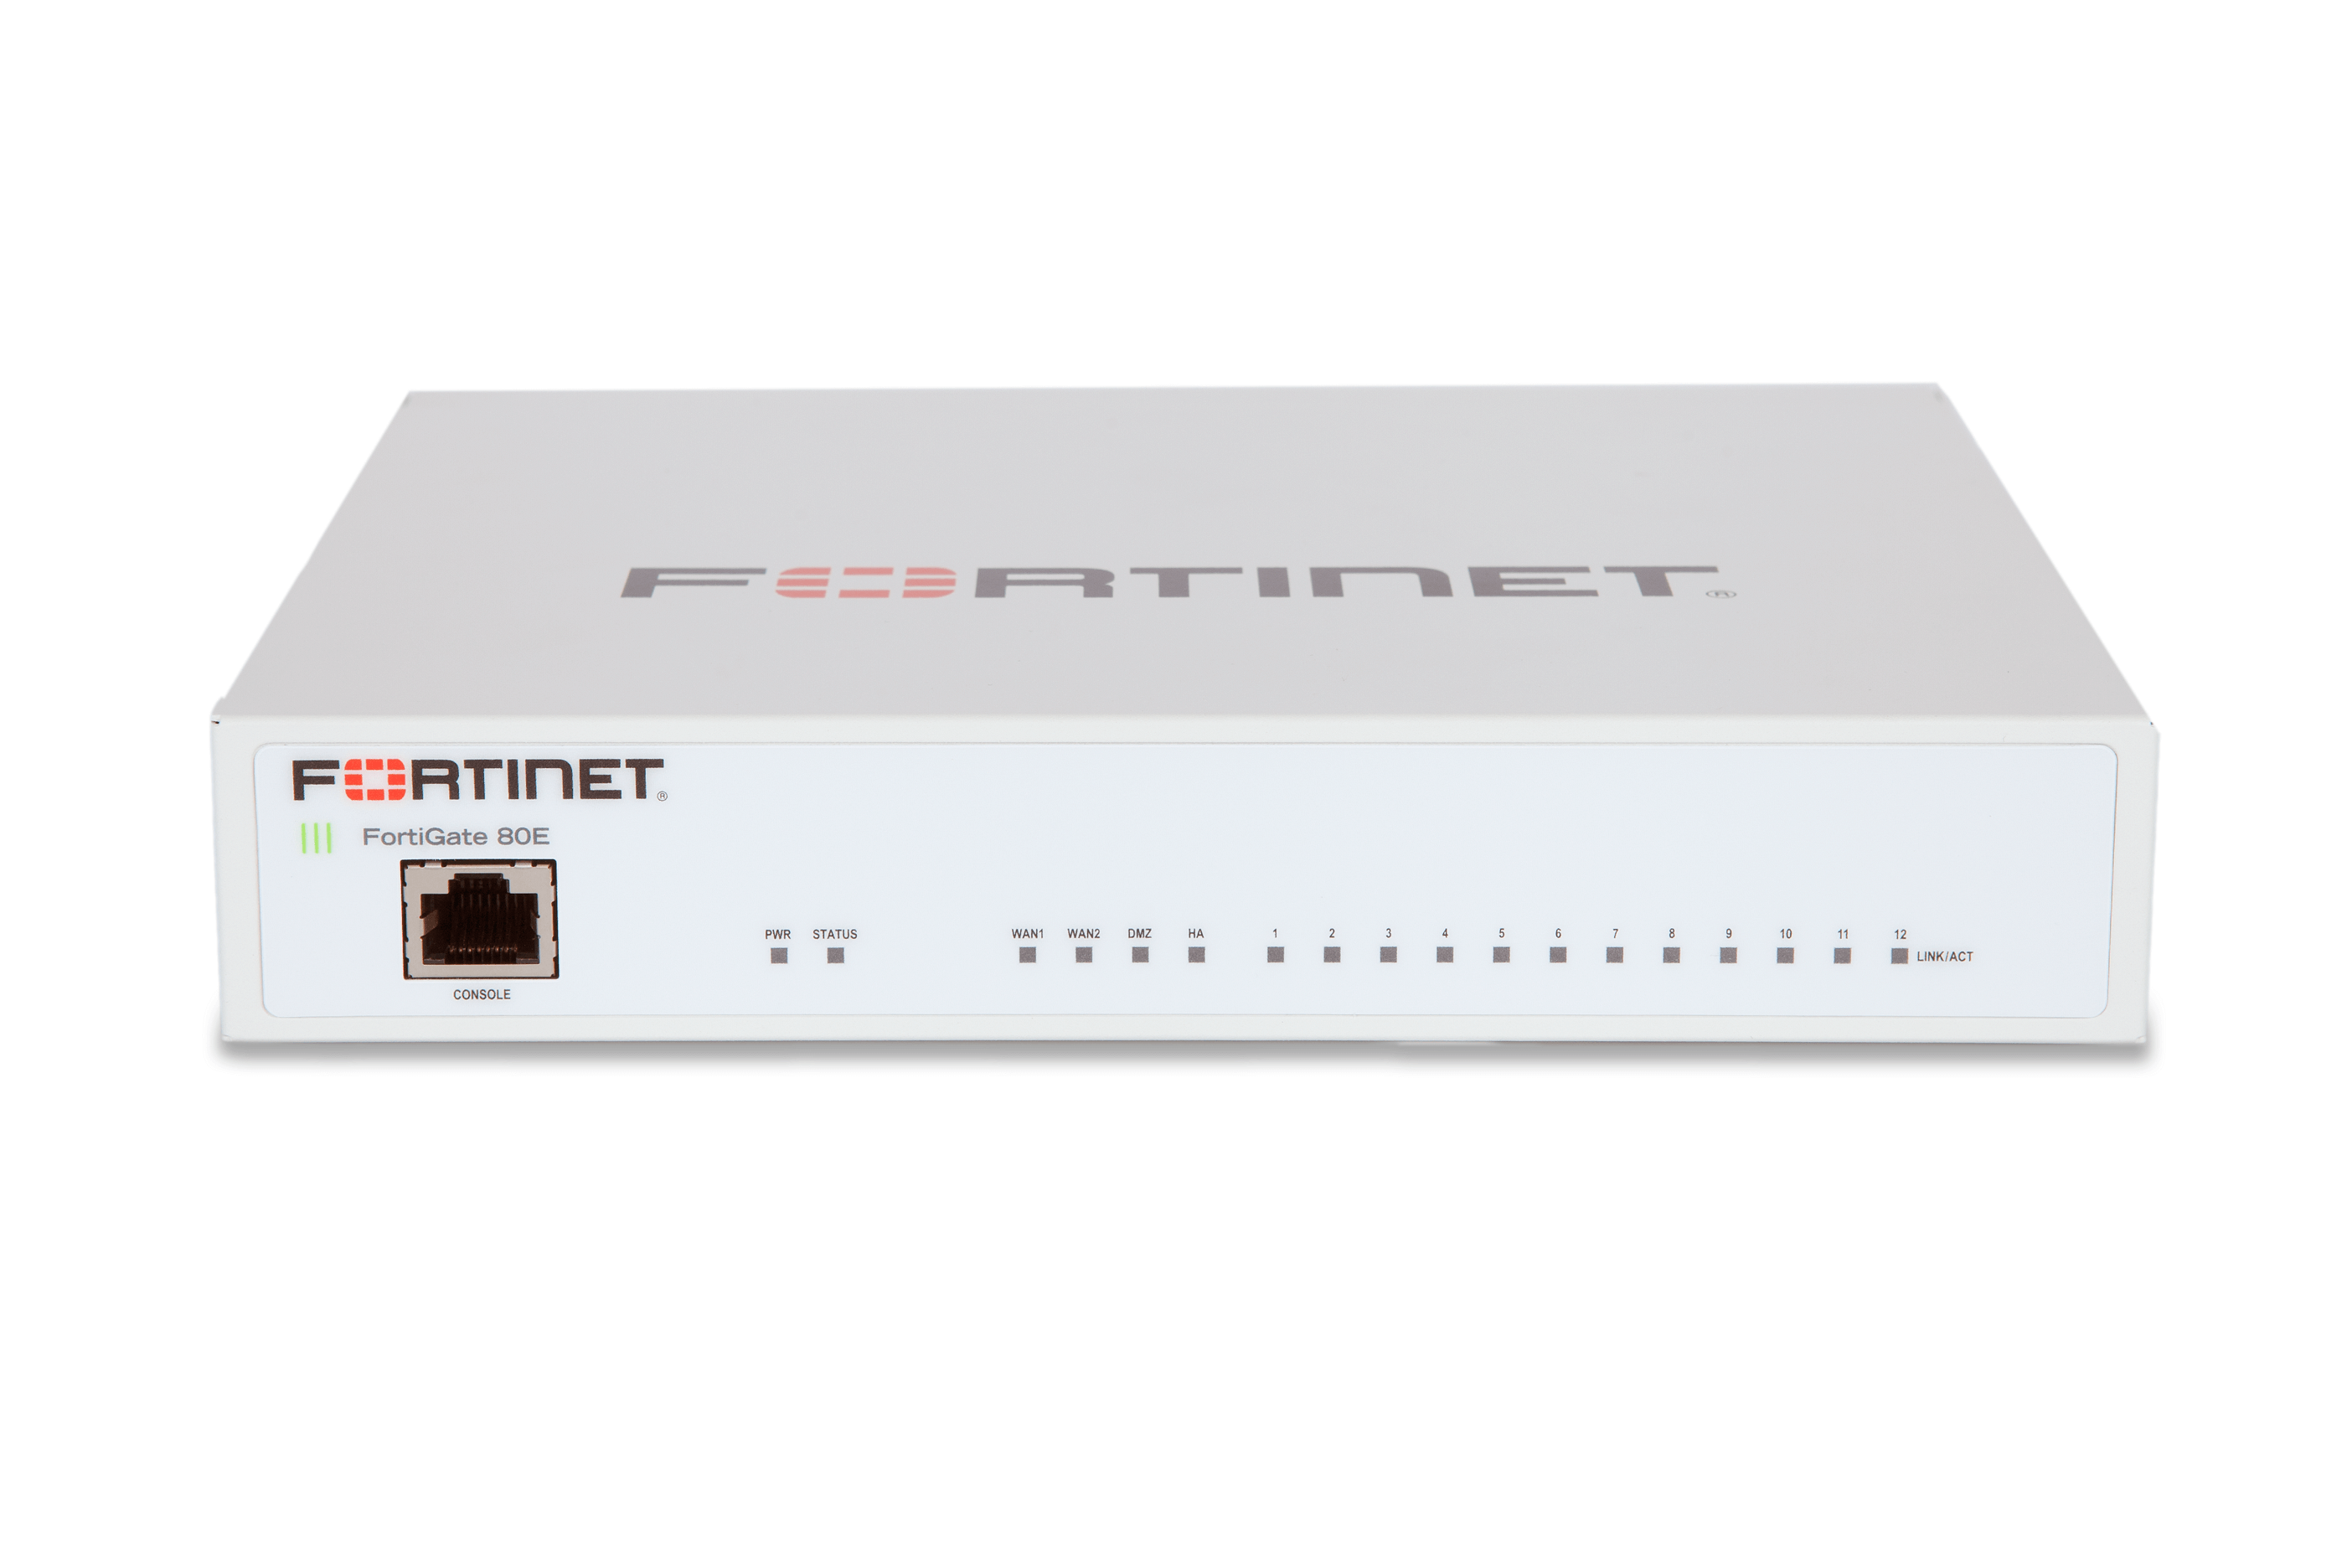 Fortinet FortiGate-80E - ATP Bundle (End of Sale/Life)